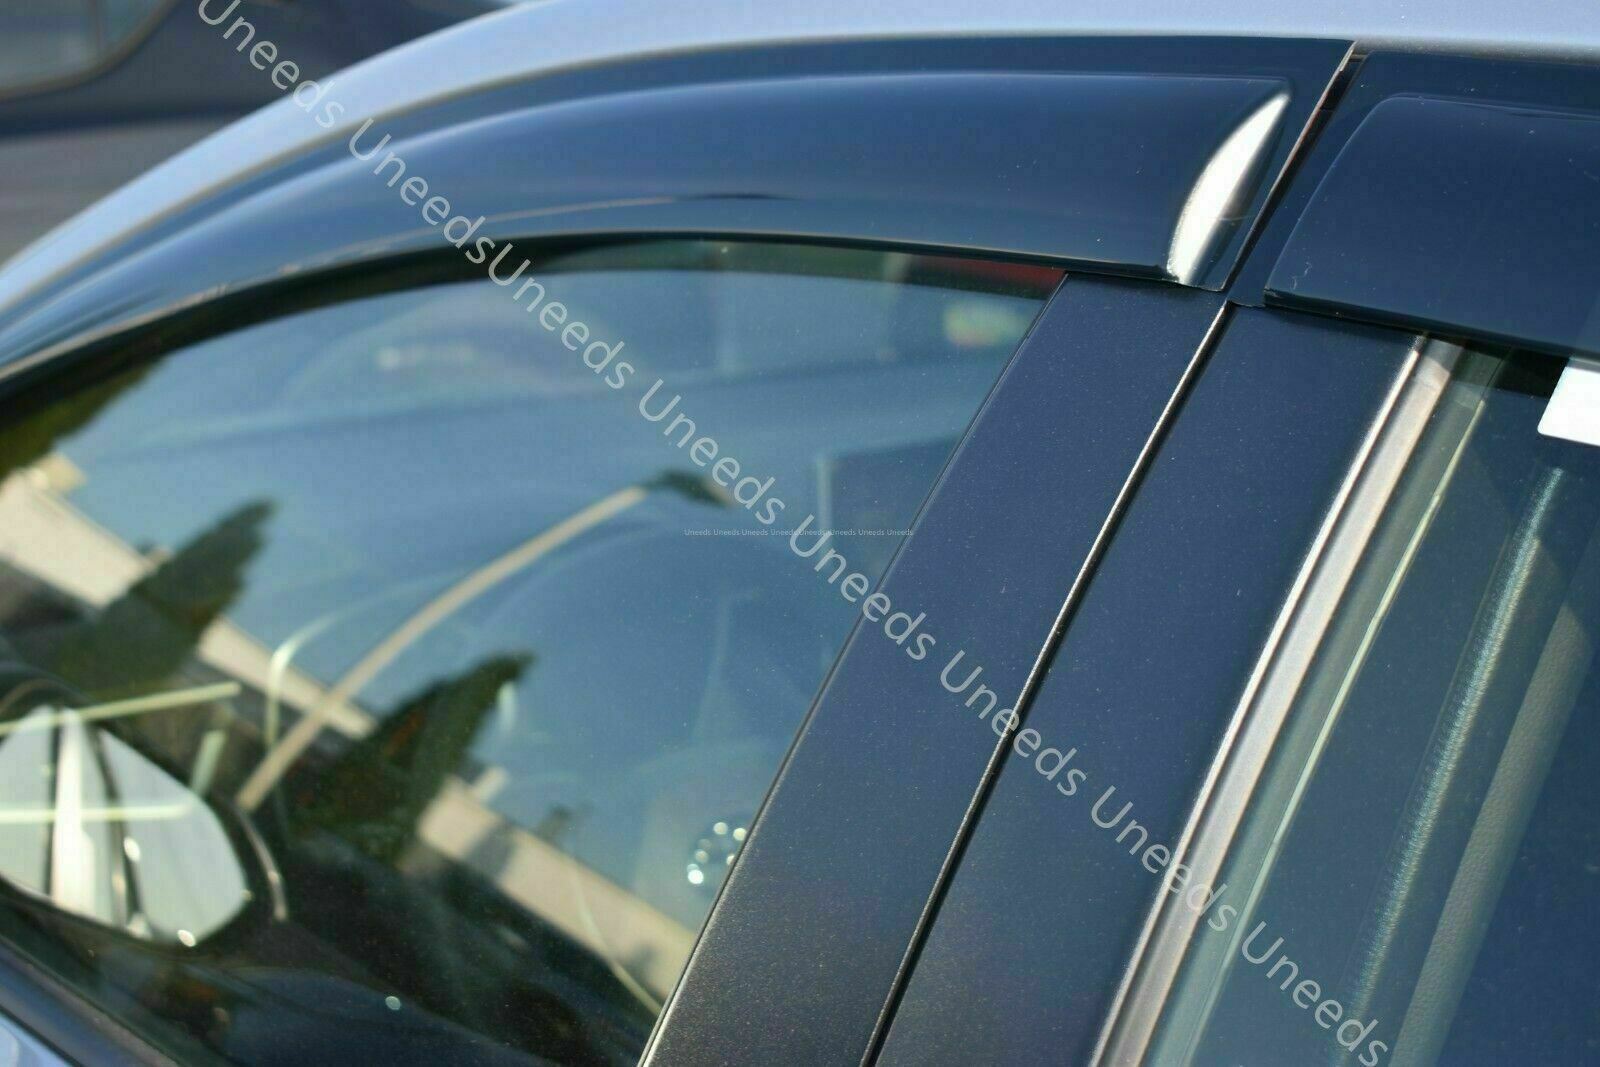 Fit 2017-2021 Lexus RX350 OE Style Vent Window Visors Rain Sun Wind Guards Shade Deflectors